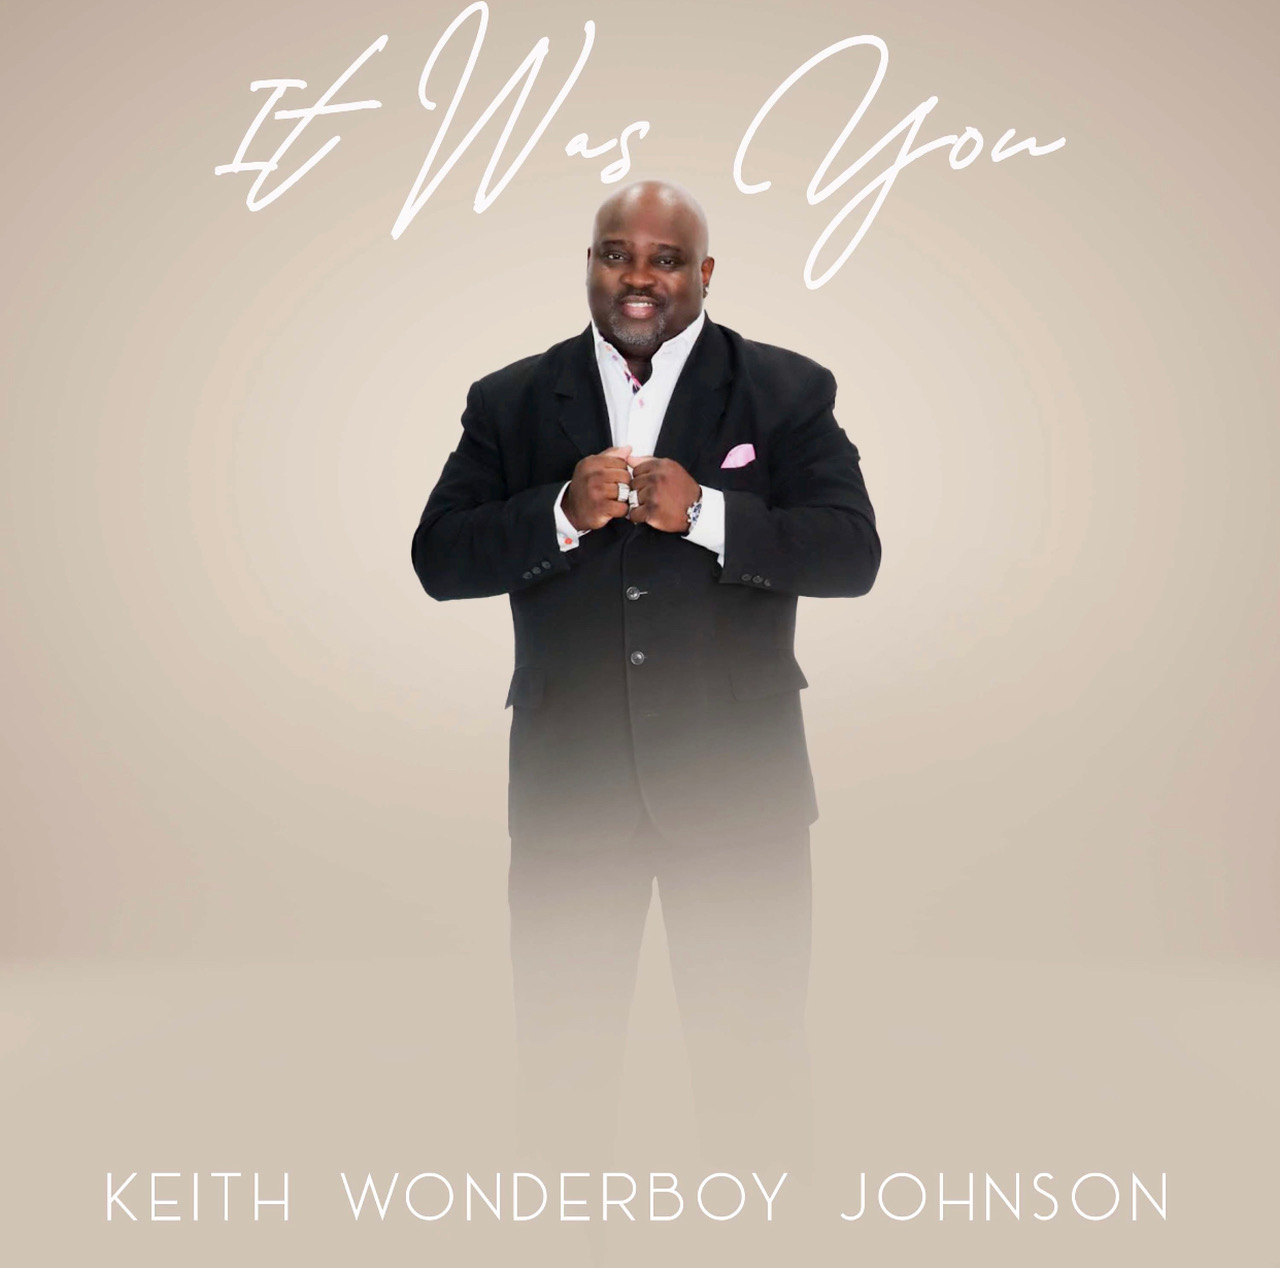 Keith Wonderboy Johnson - It Was You!